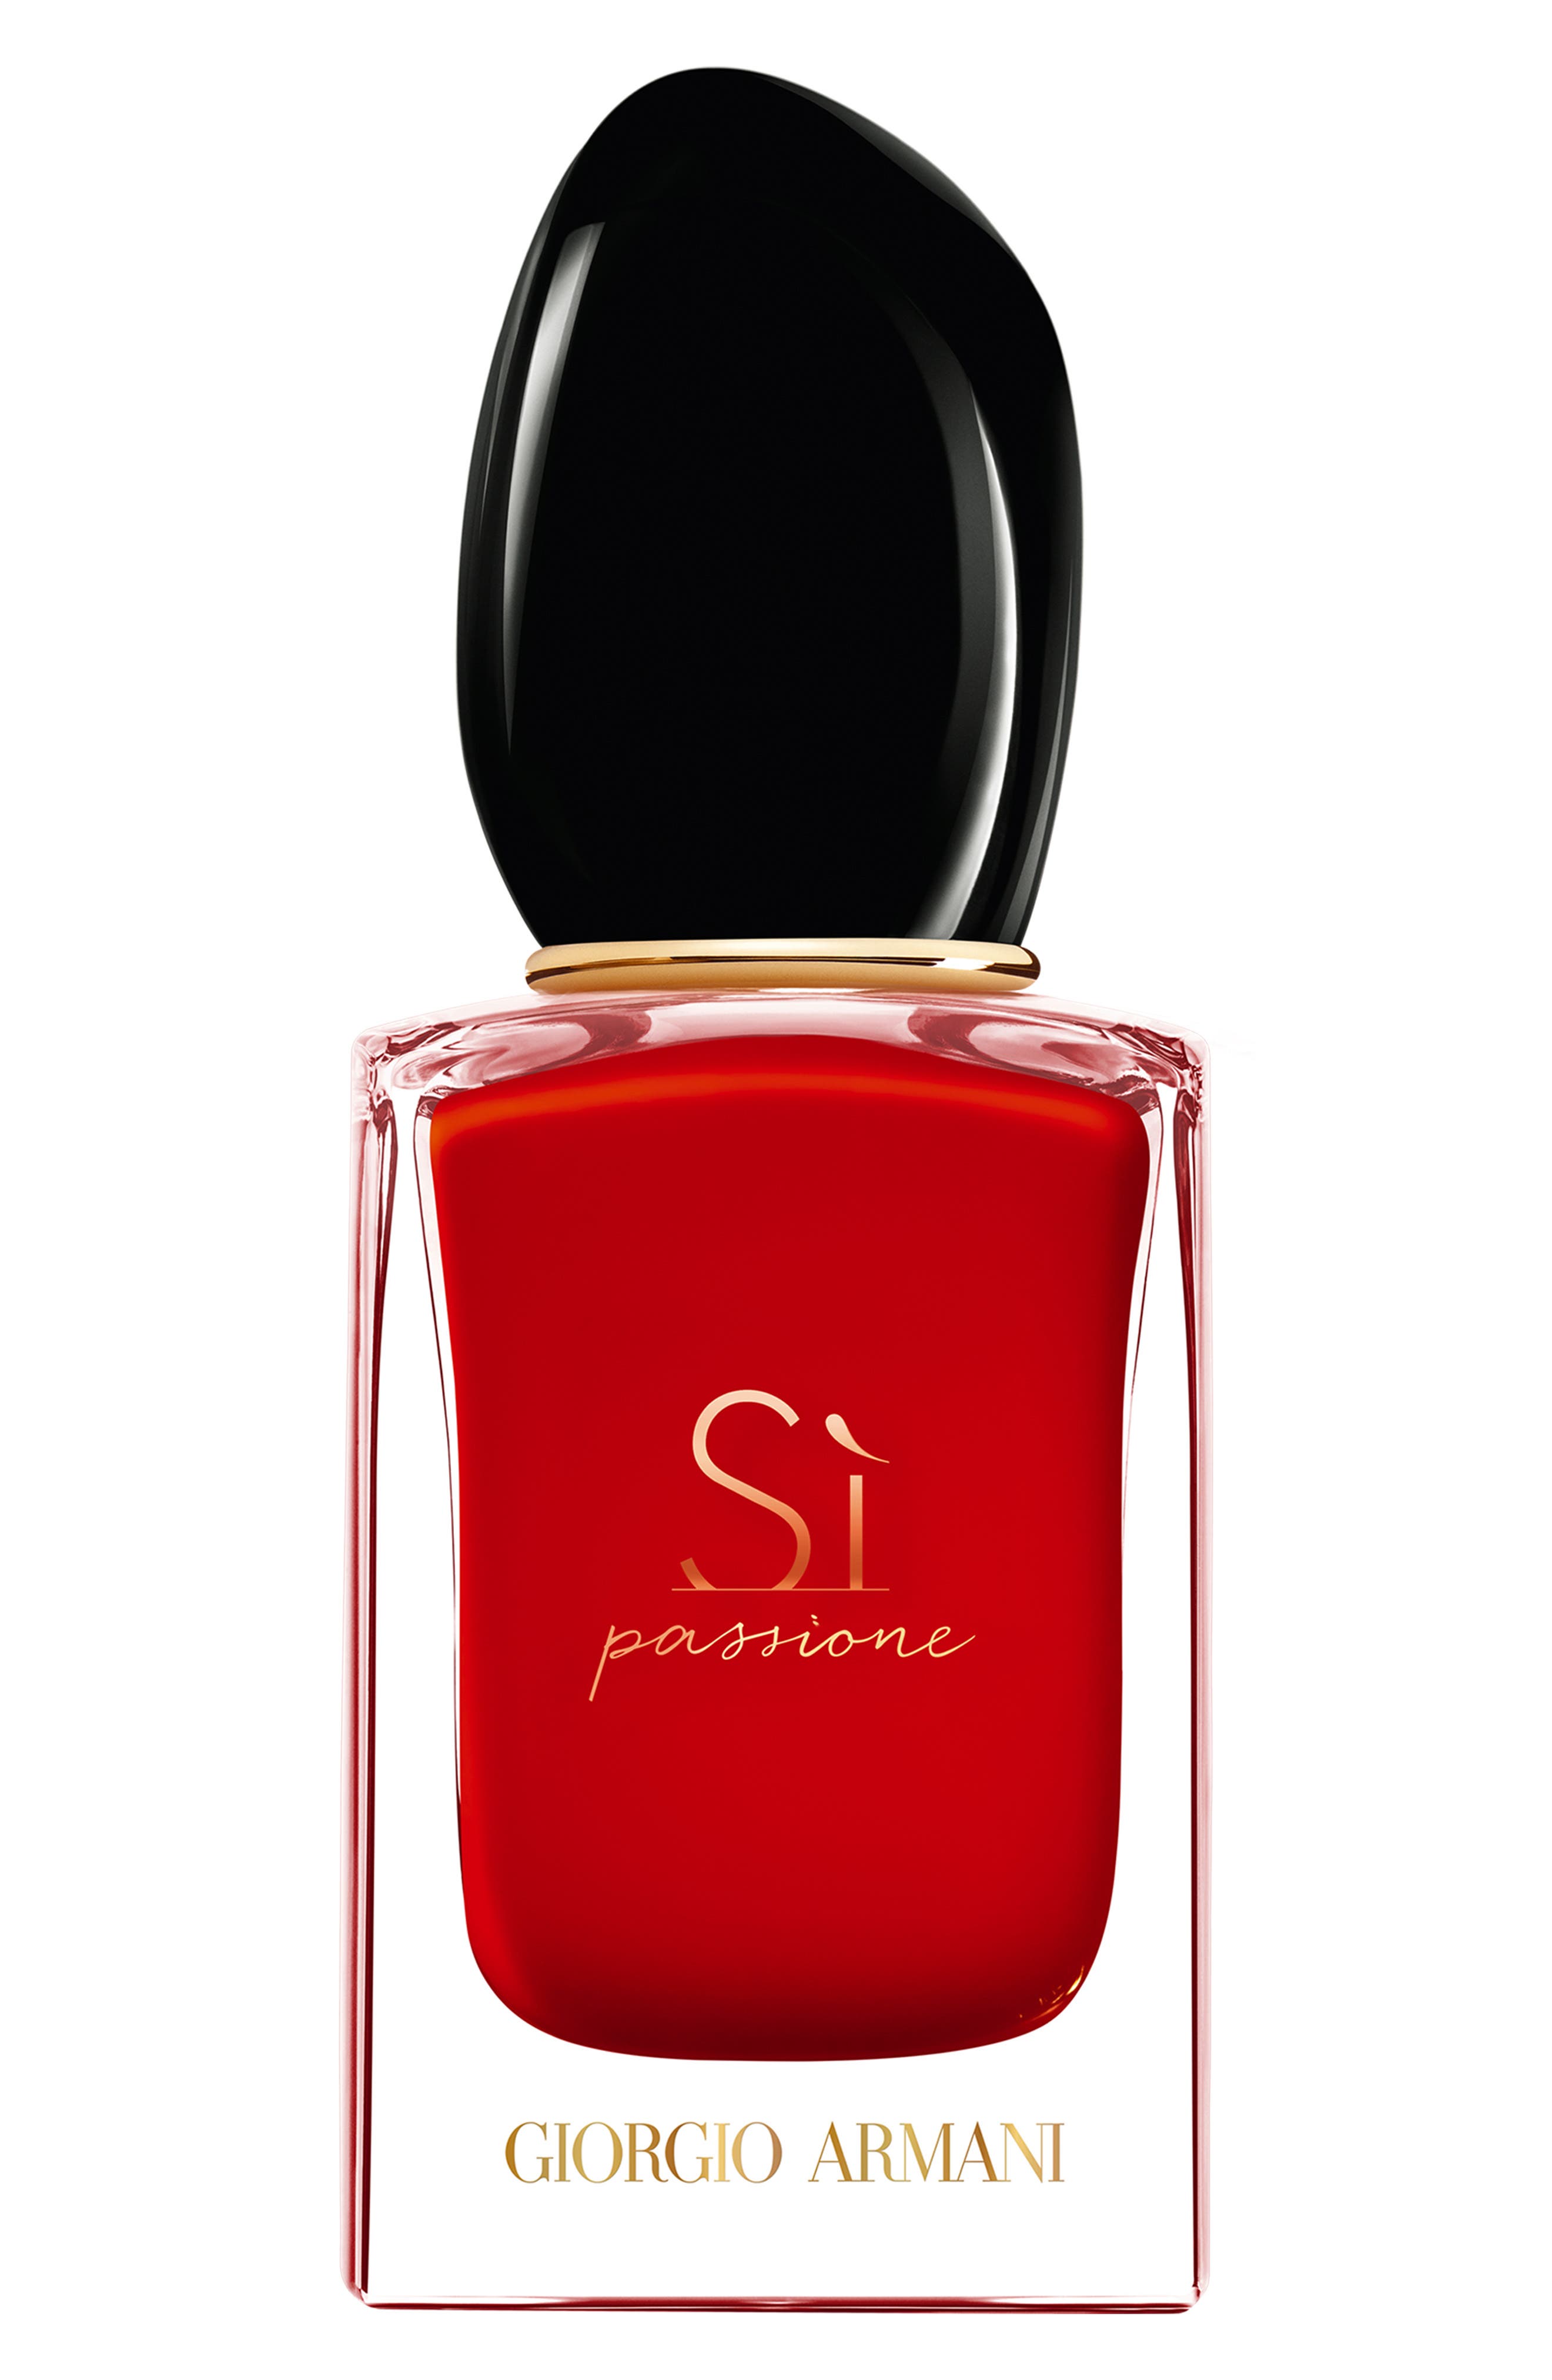 Giorgio Armani Si Passione Eau de Parfum Fragrance at Nordstrom, Size 1 Oz